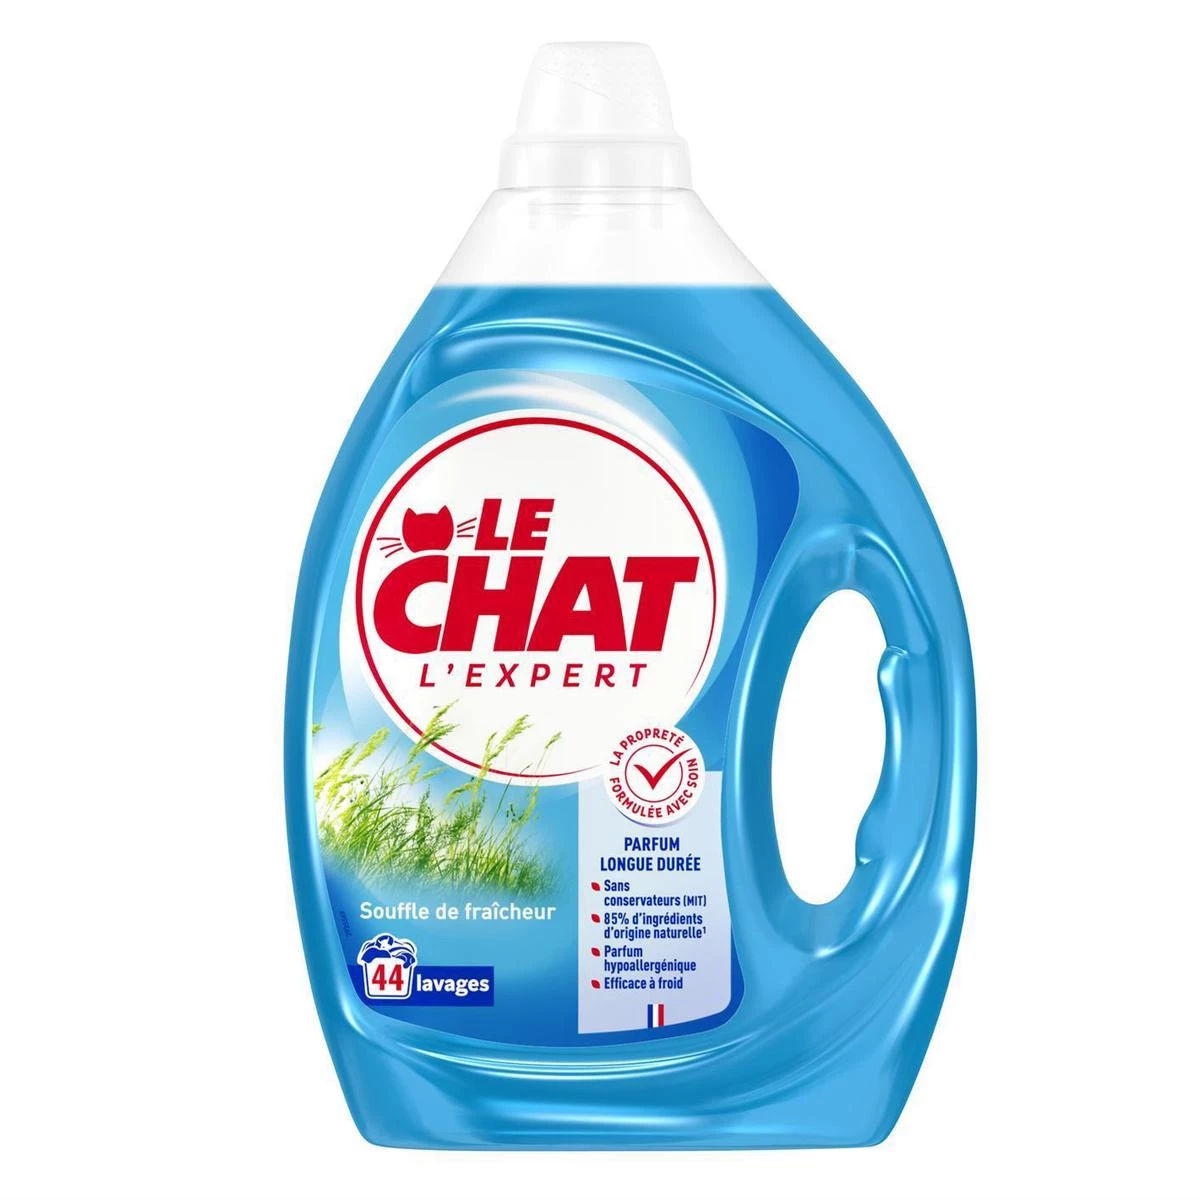 L'expert Breath of Freshness Liquid Detergent 2.2l - Le Chat